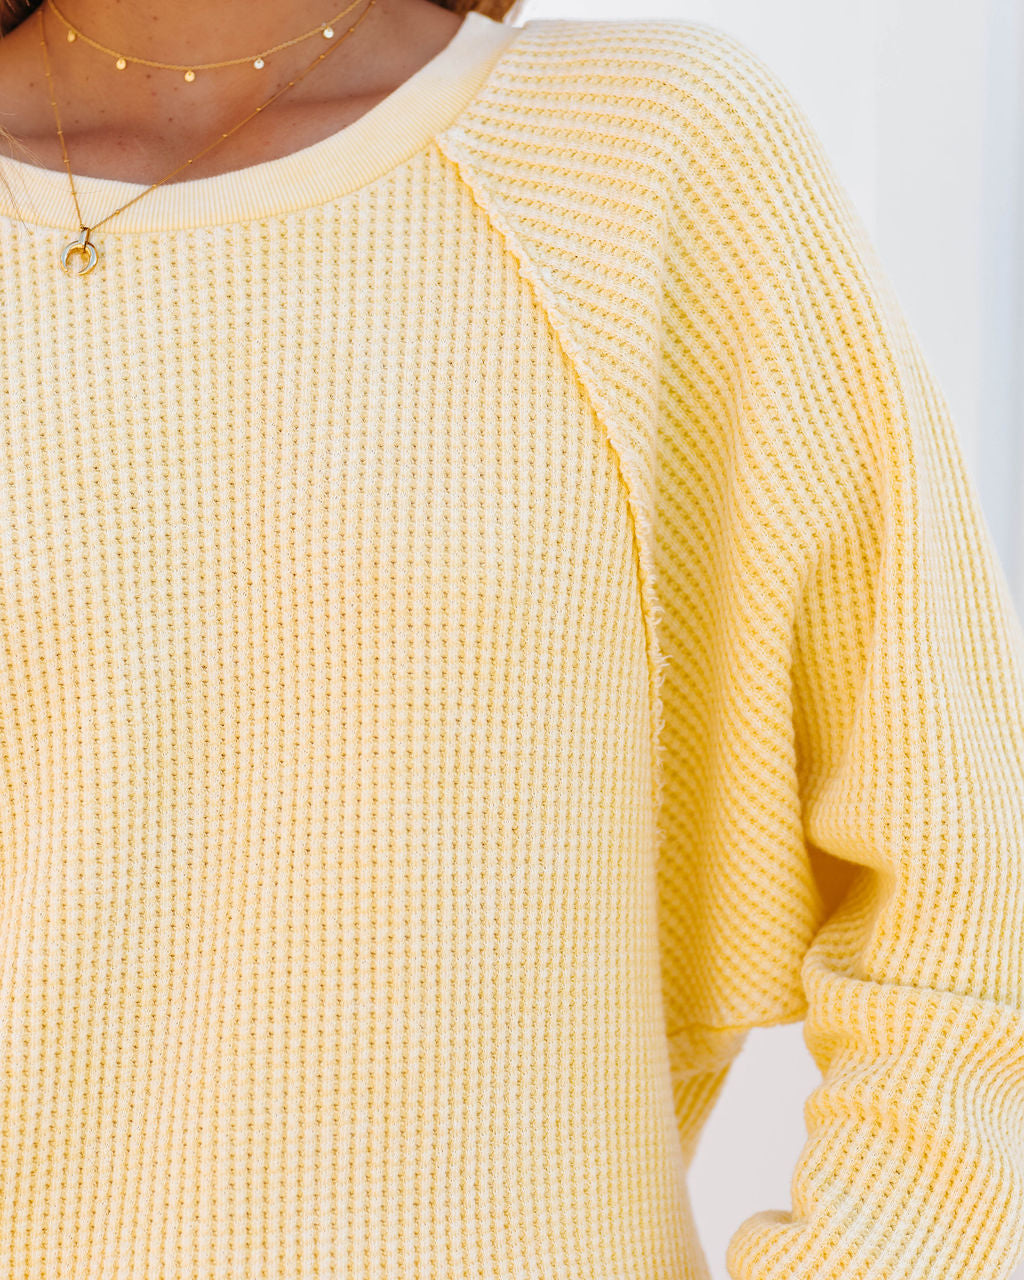 Lizabeth Cotton Thermal Knit Top - Yellow